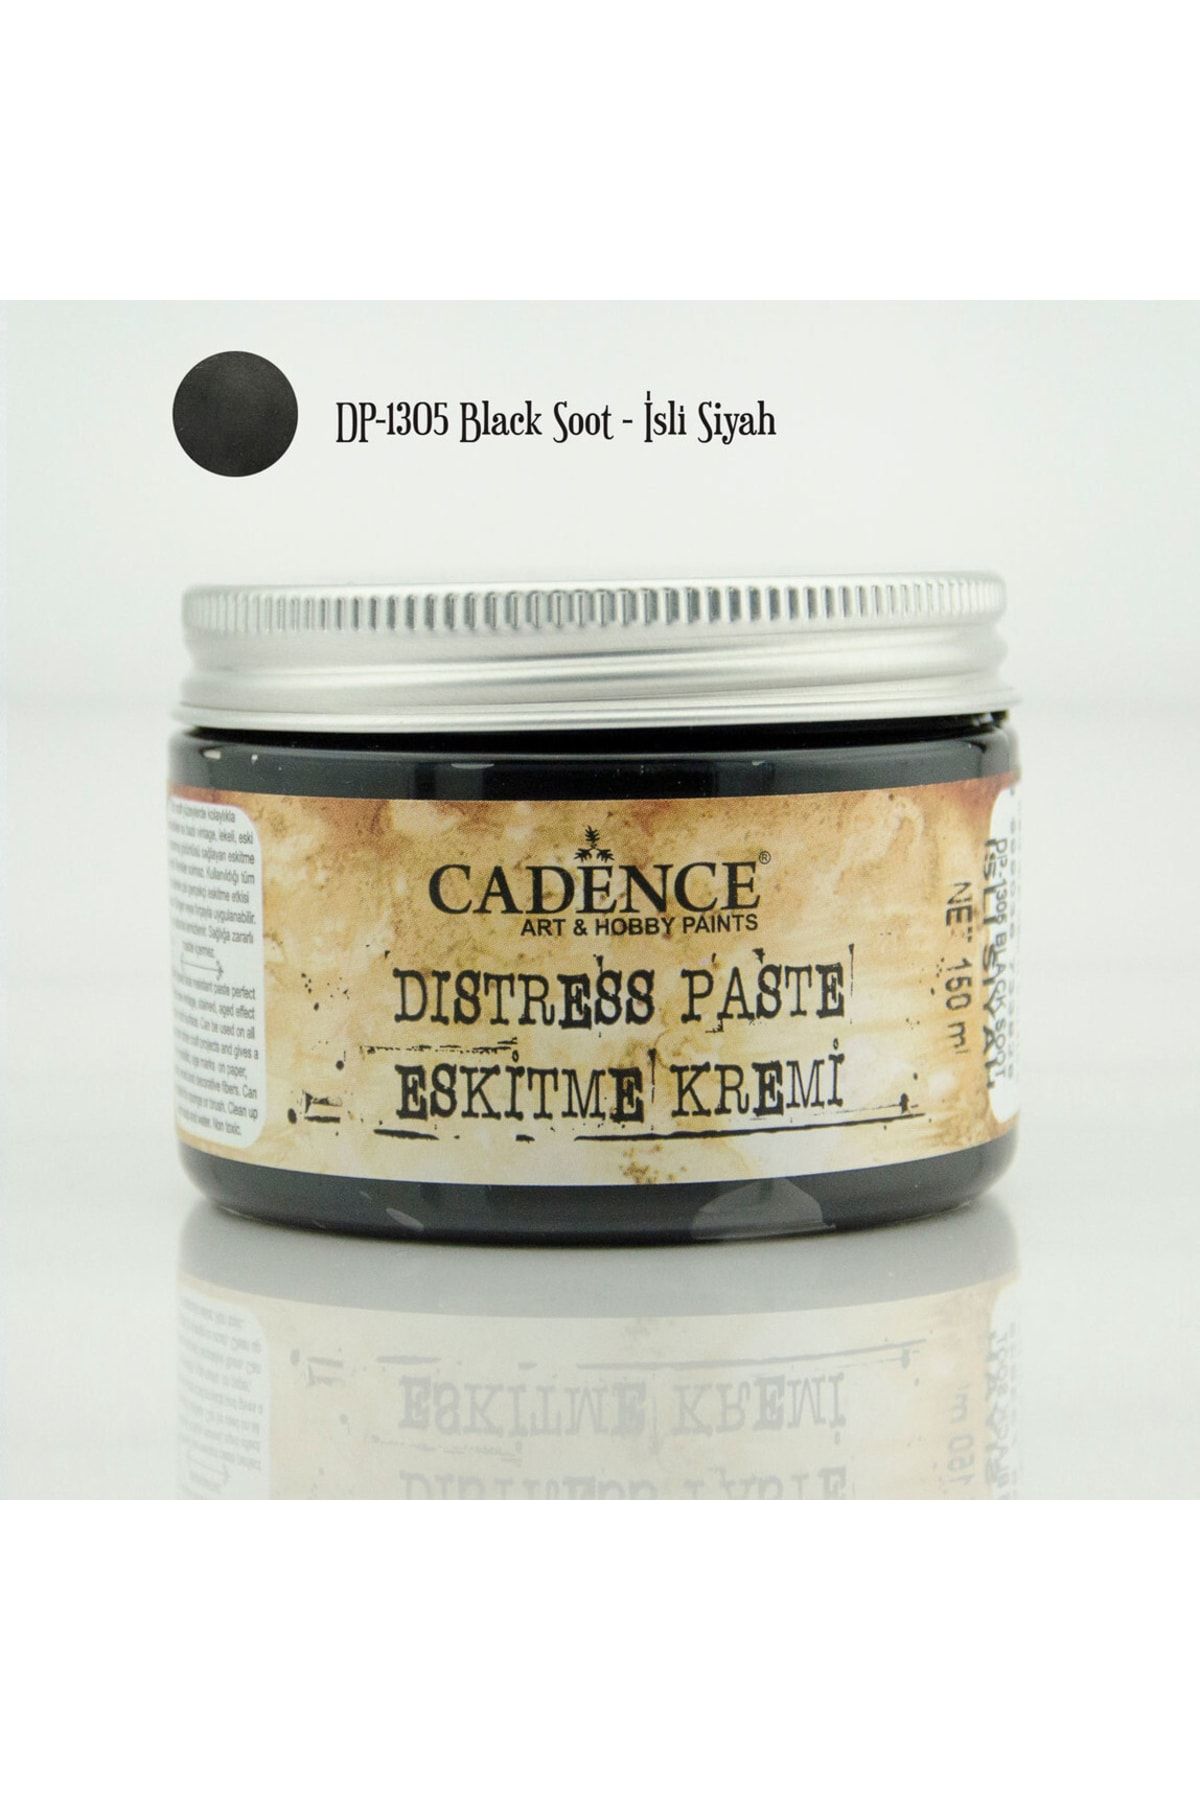 Cadence Distress Paste - Eskitme Kremi 150ml Dp 1305 Black Soot - Isli Siyah